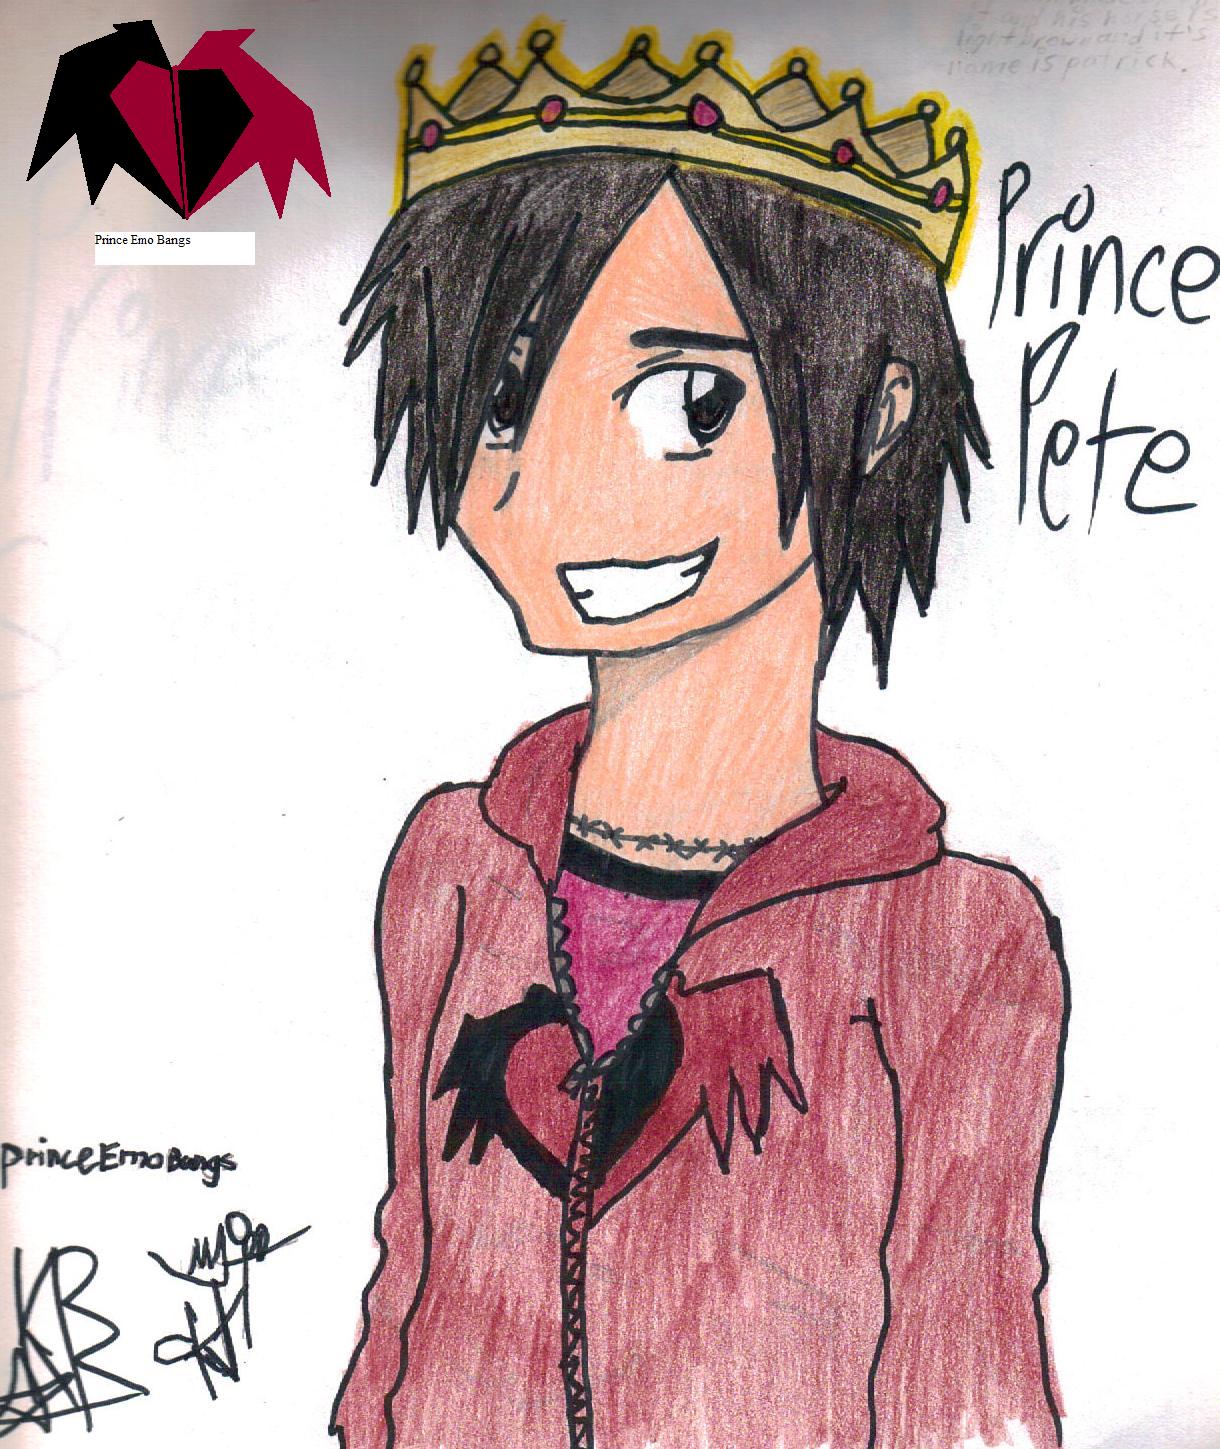 Prince Pete art trade by Kelalailea